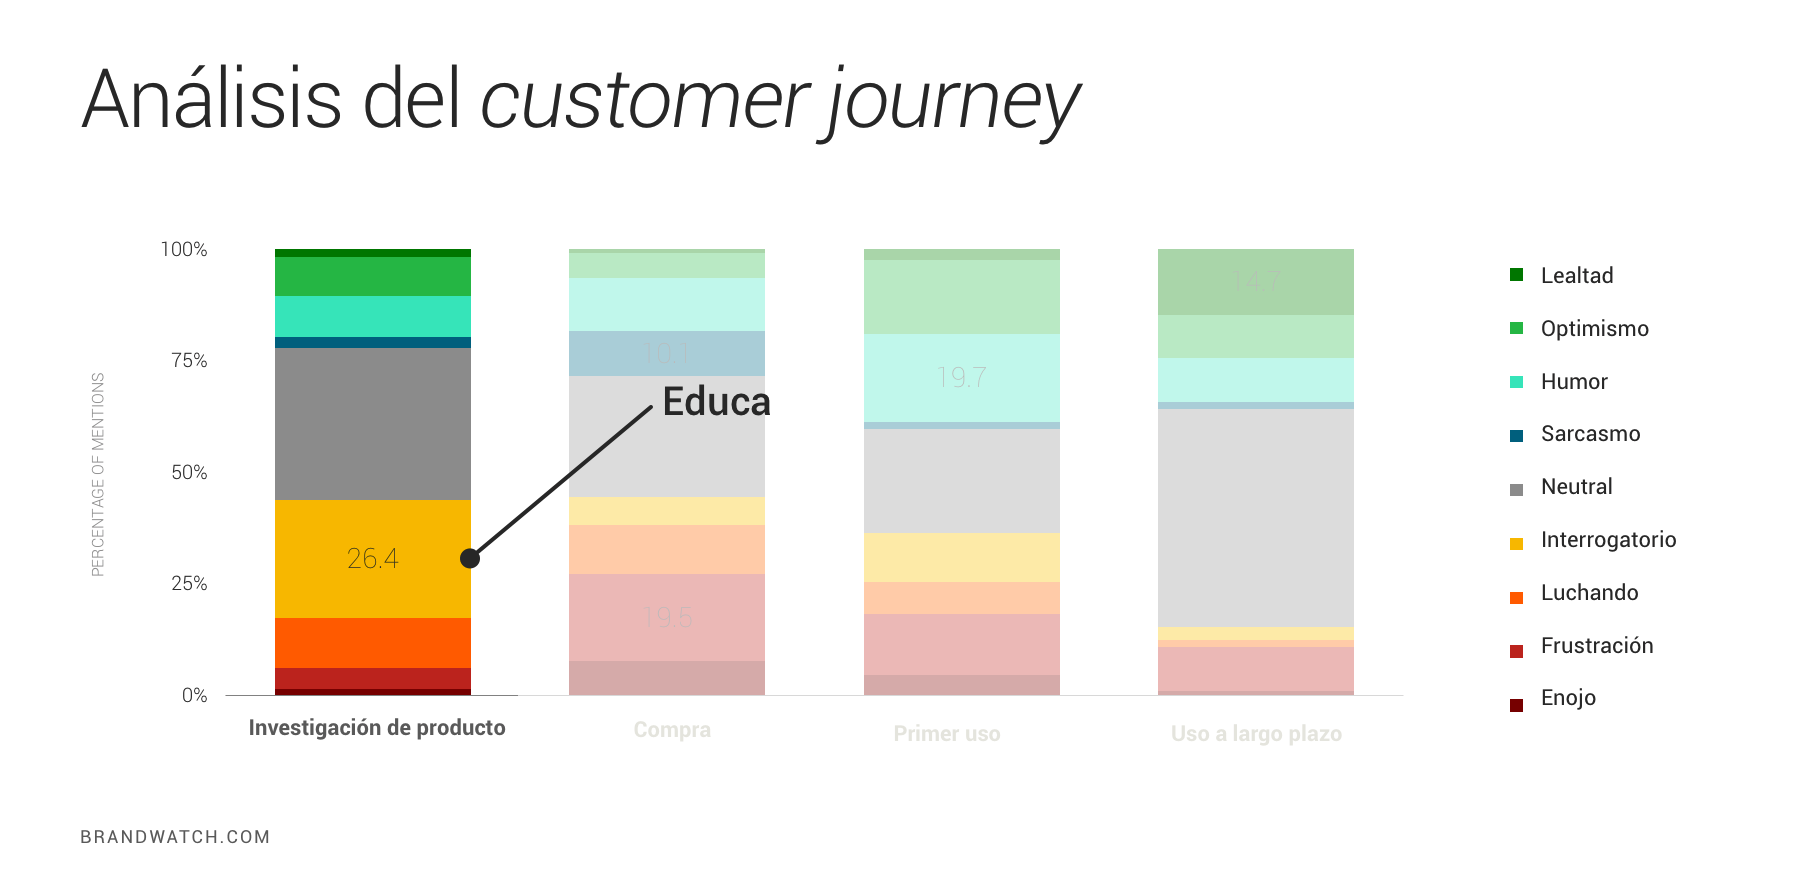 Cada paso del customer journey - Educar